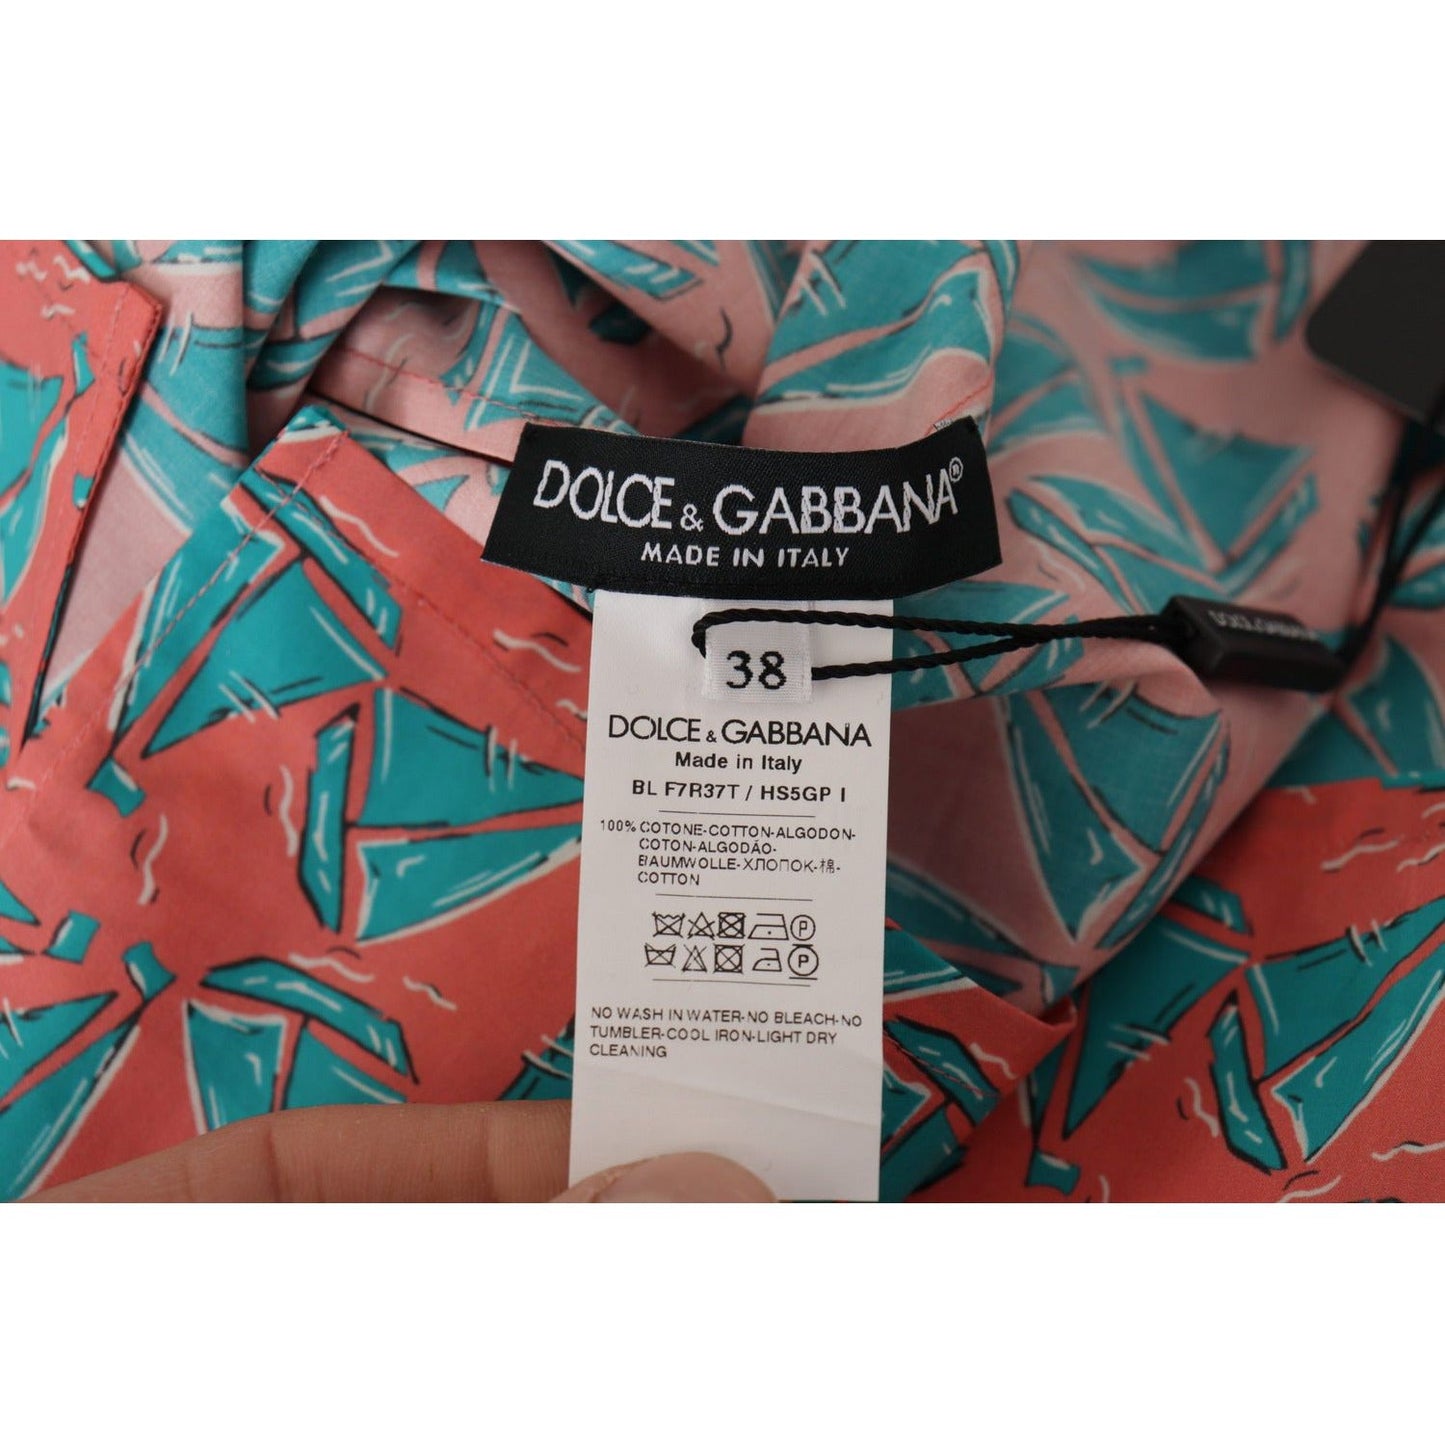 Dolce & Gabbana Chic Pink Sailboat Print Cotton Top pink-sail-boat-print-cotton-t-shirt